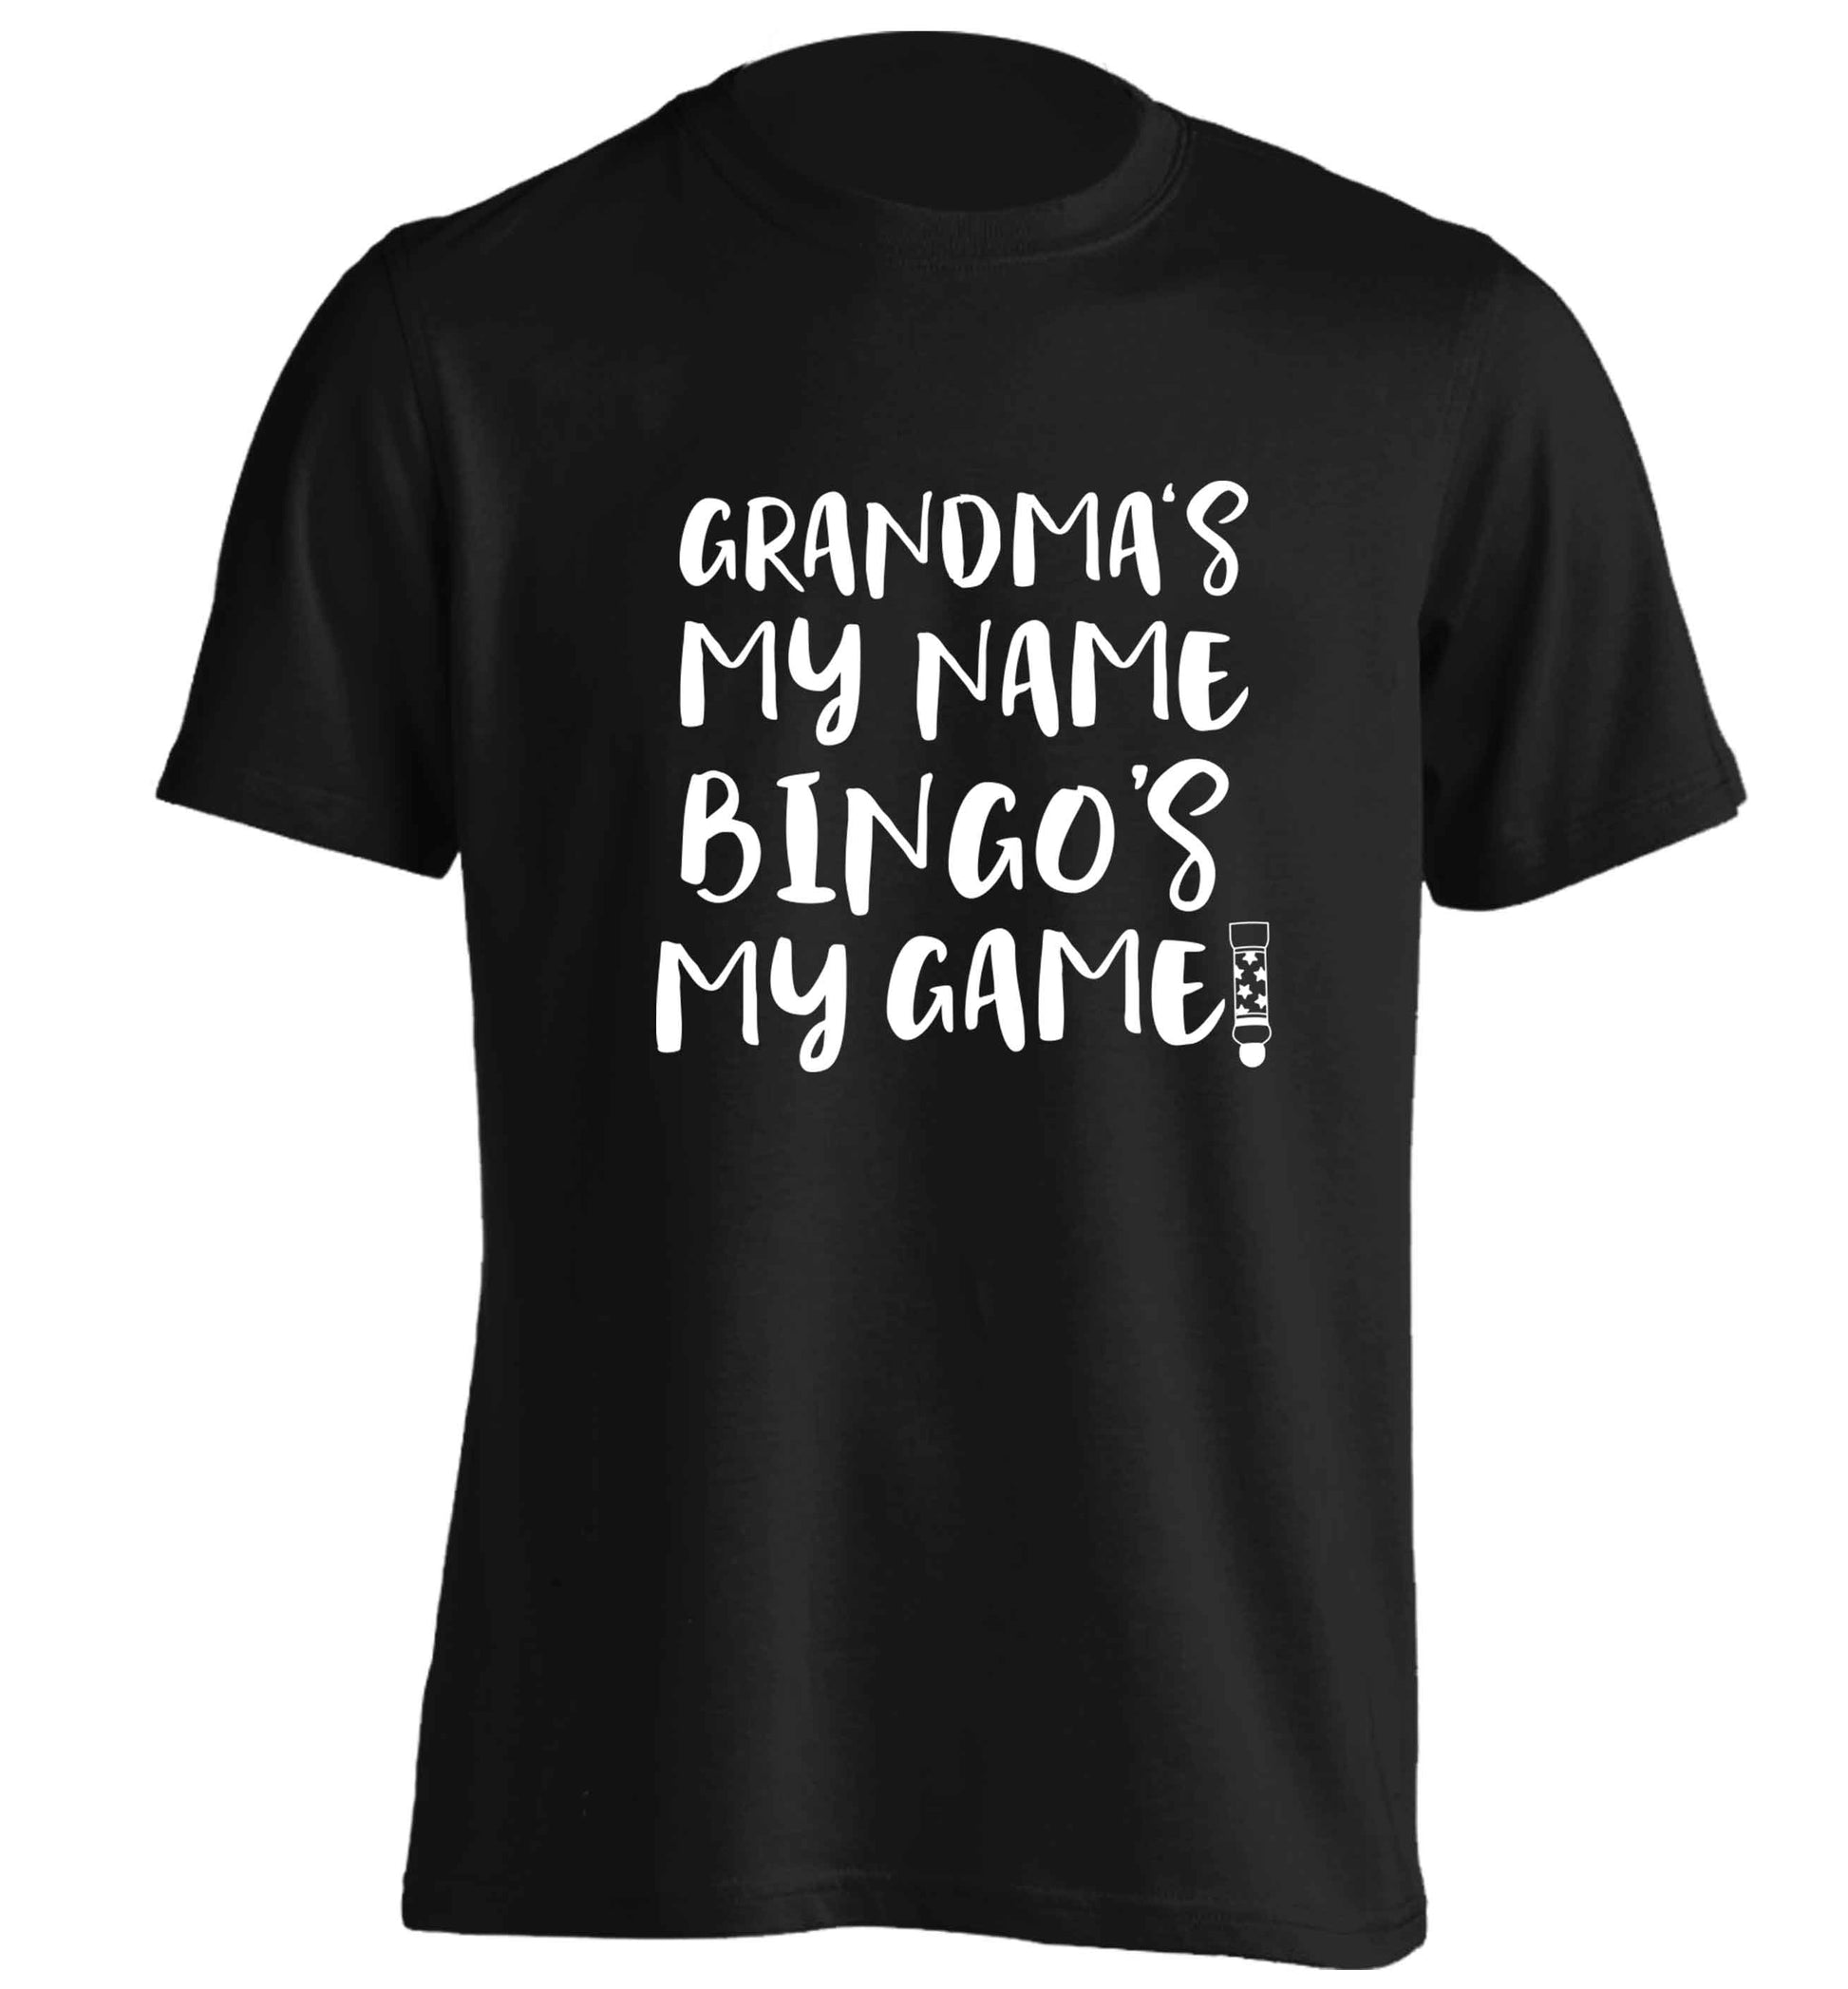 Grandma's my name bingo's my game! adults unisex black Tshirt 2XL